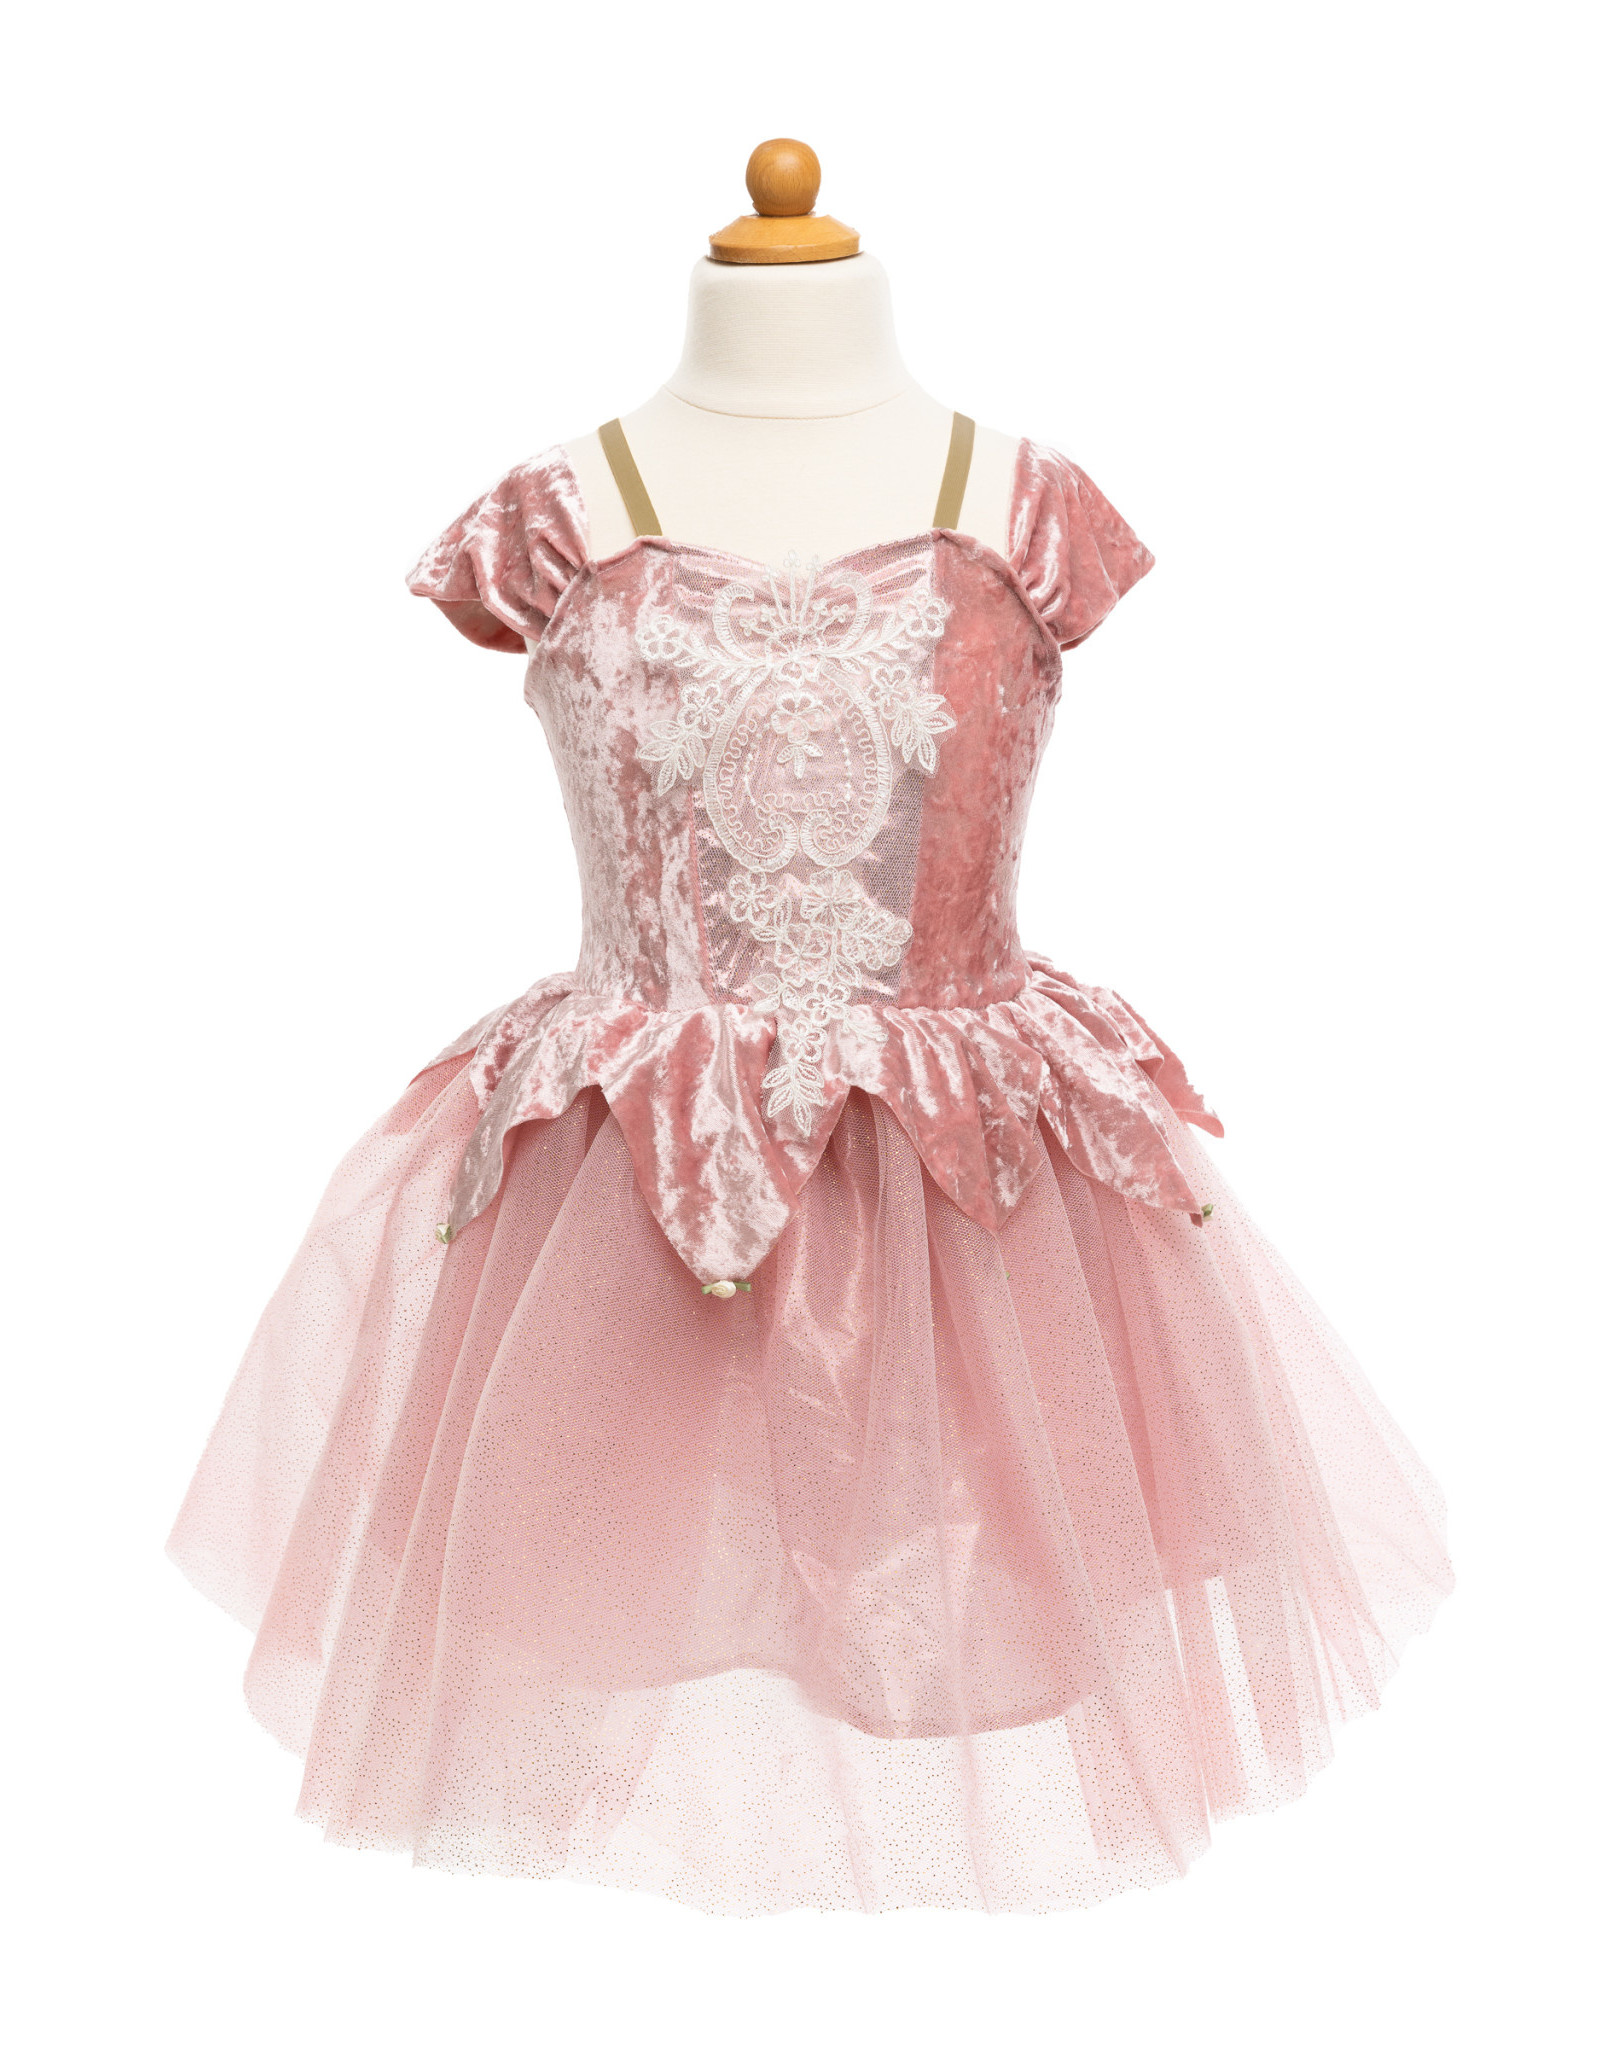 Great Pretenders Dusty Rose Holiday Ballerina Dress, Size 7/8